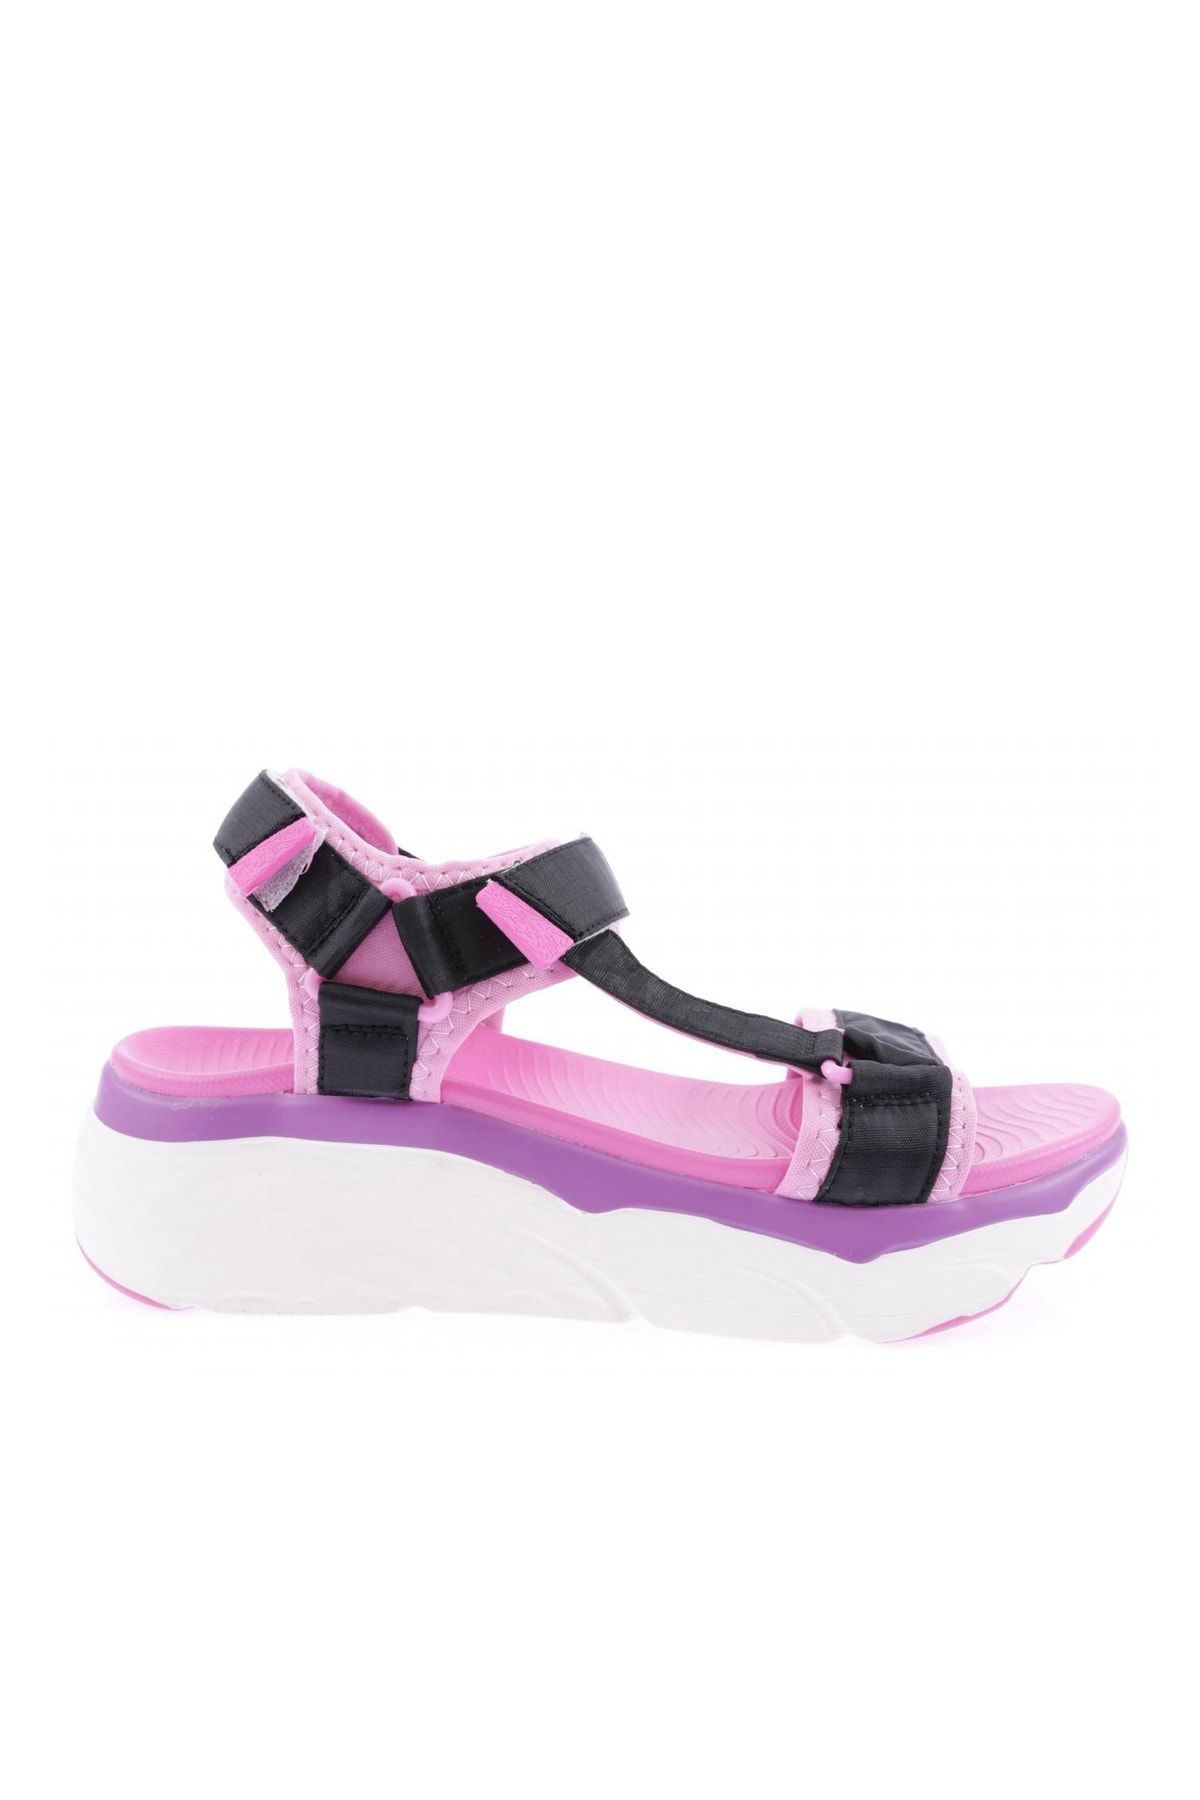 Guja Pembe - 22y374-1 Kadın Sneakers Ayakkabı